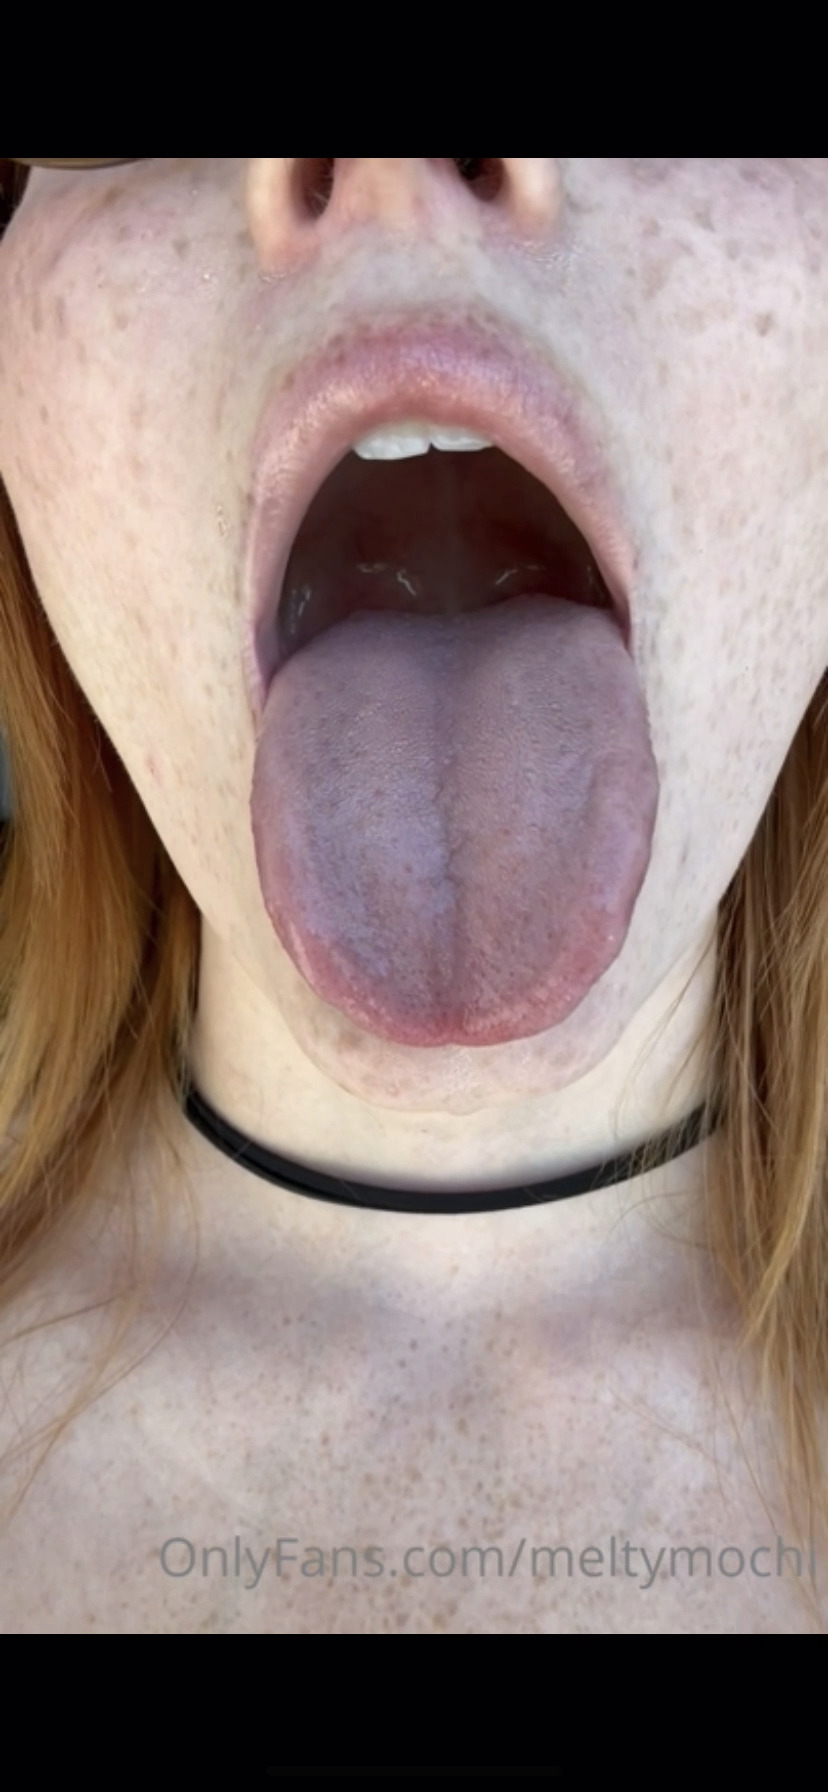 Meltymochi tongue fetish custom video